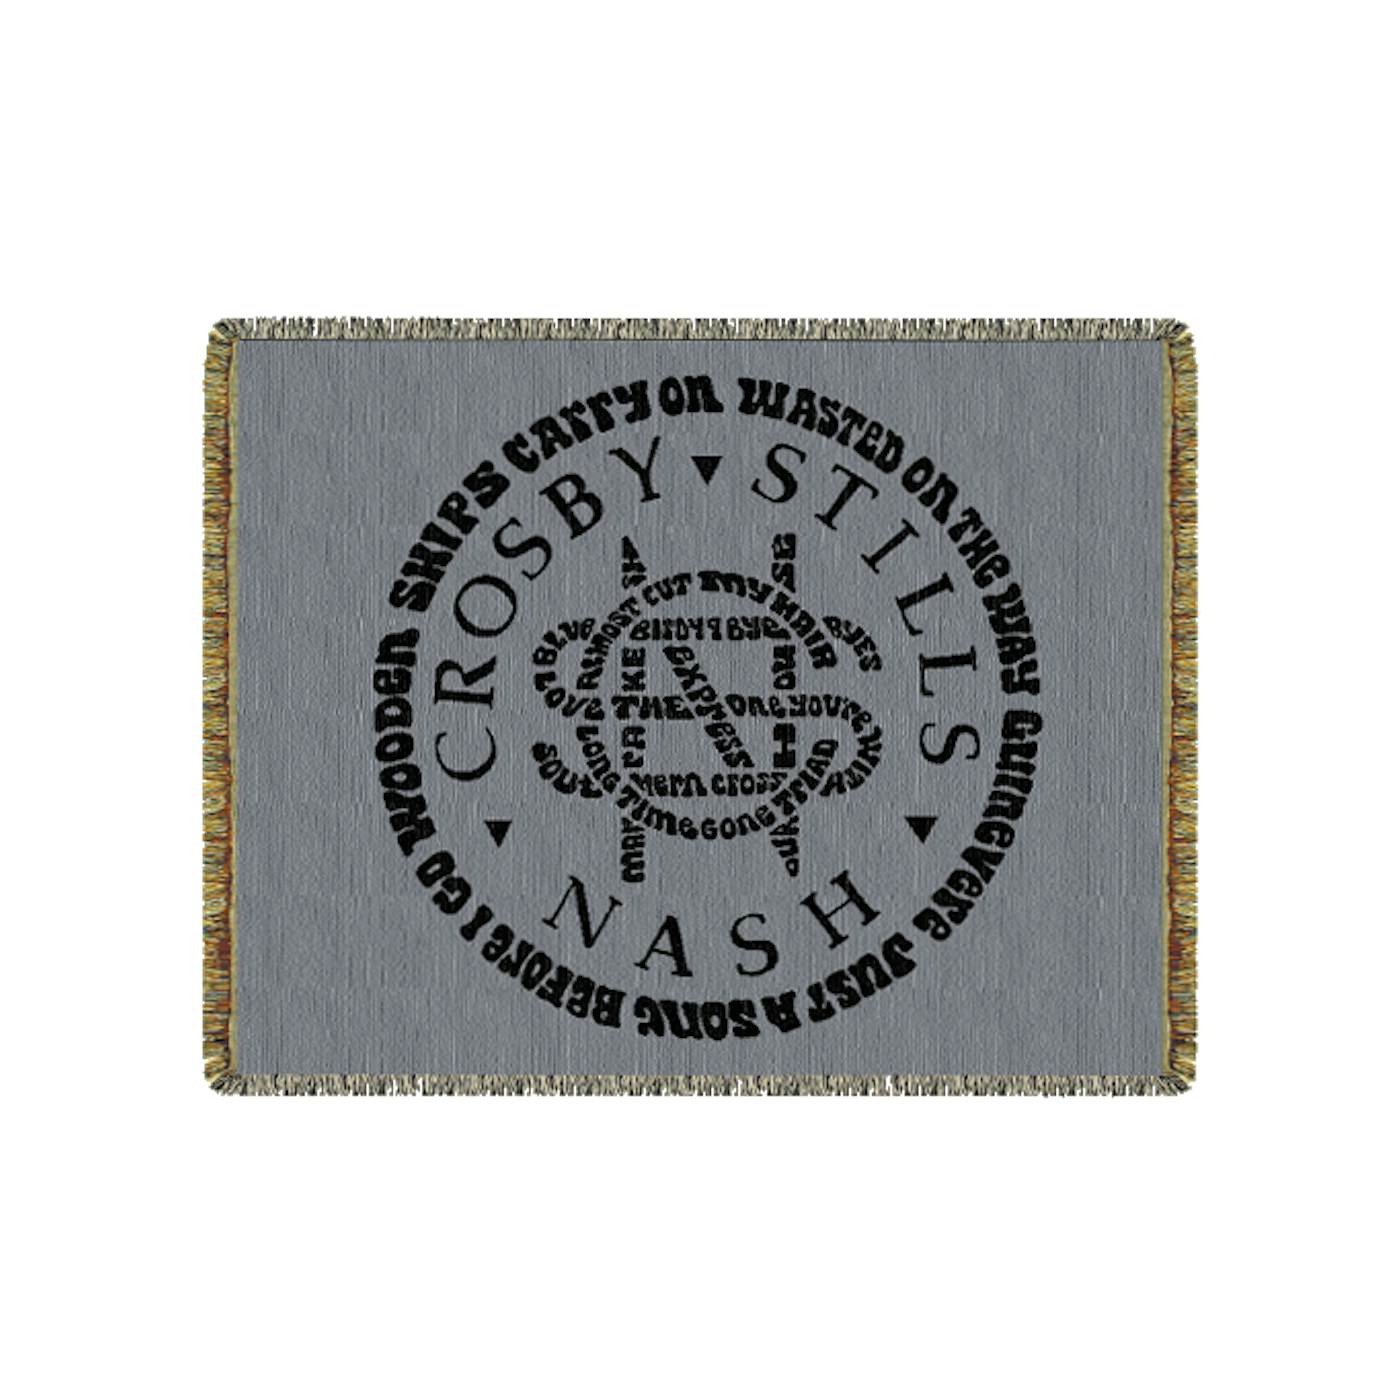 Crosby, Stills & Nash CSN "Initials" Tapestry Blanket